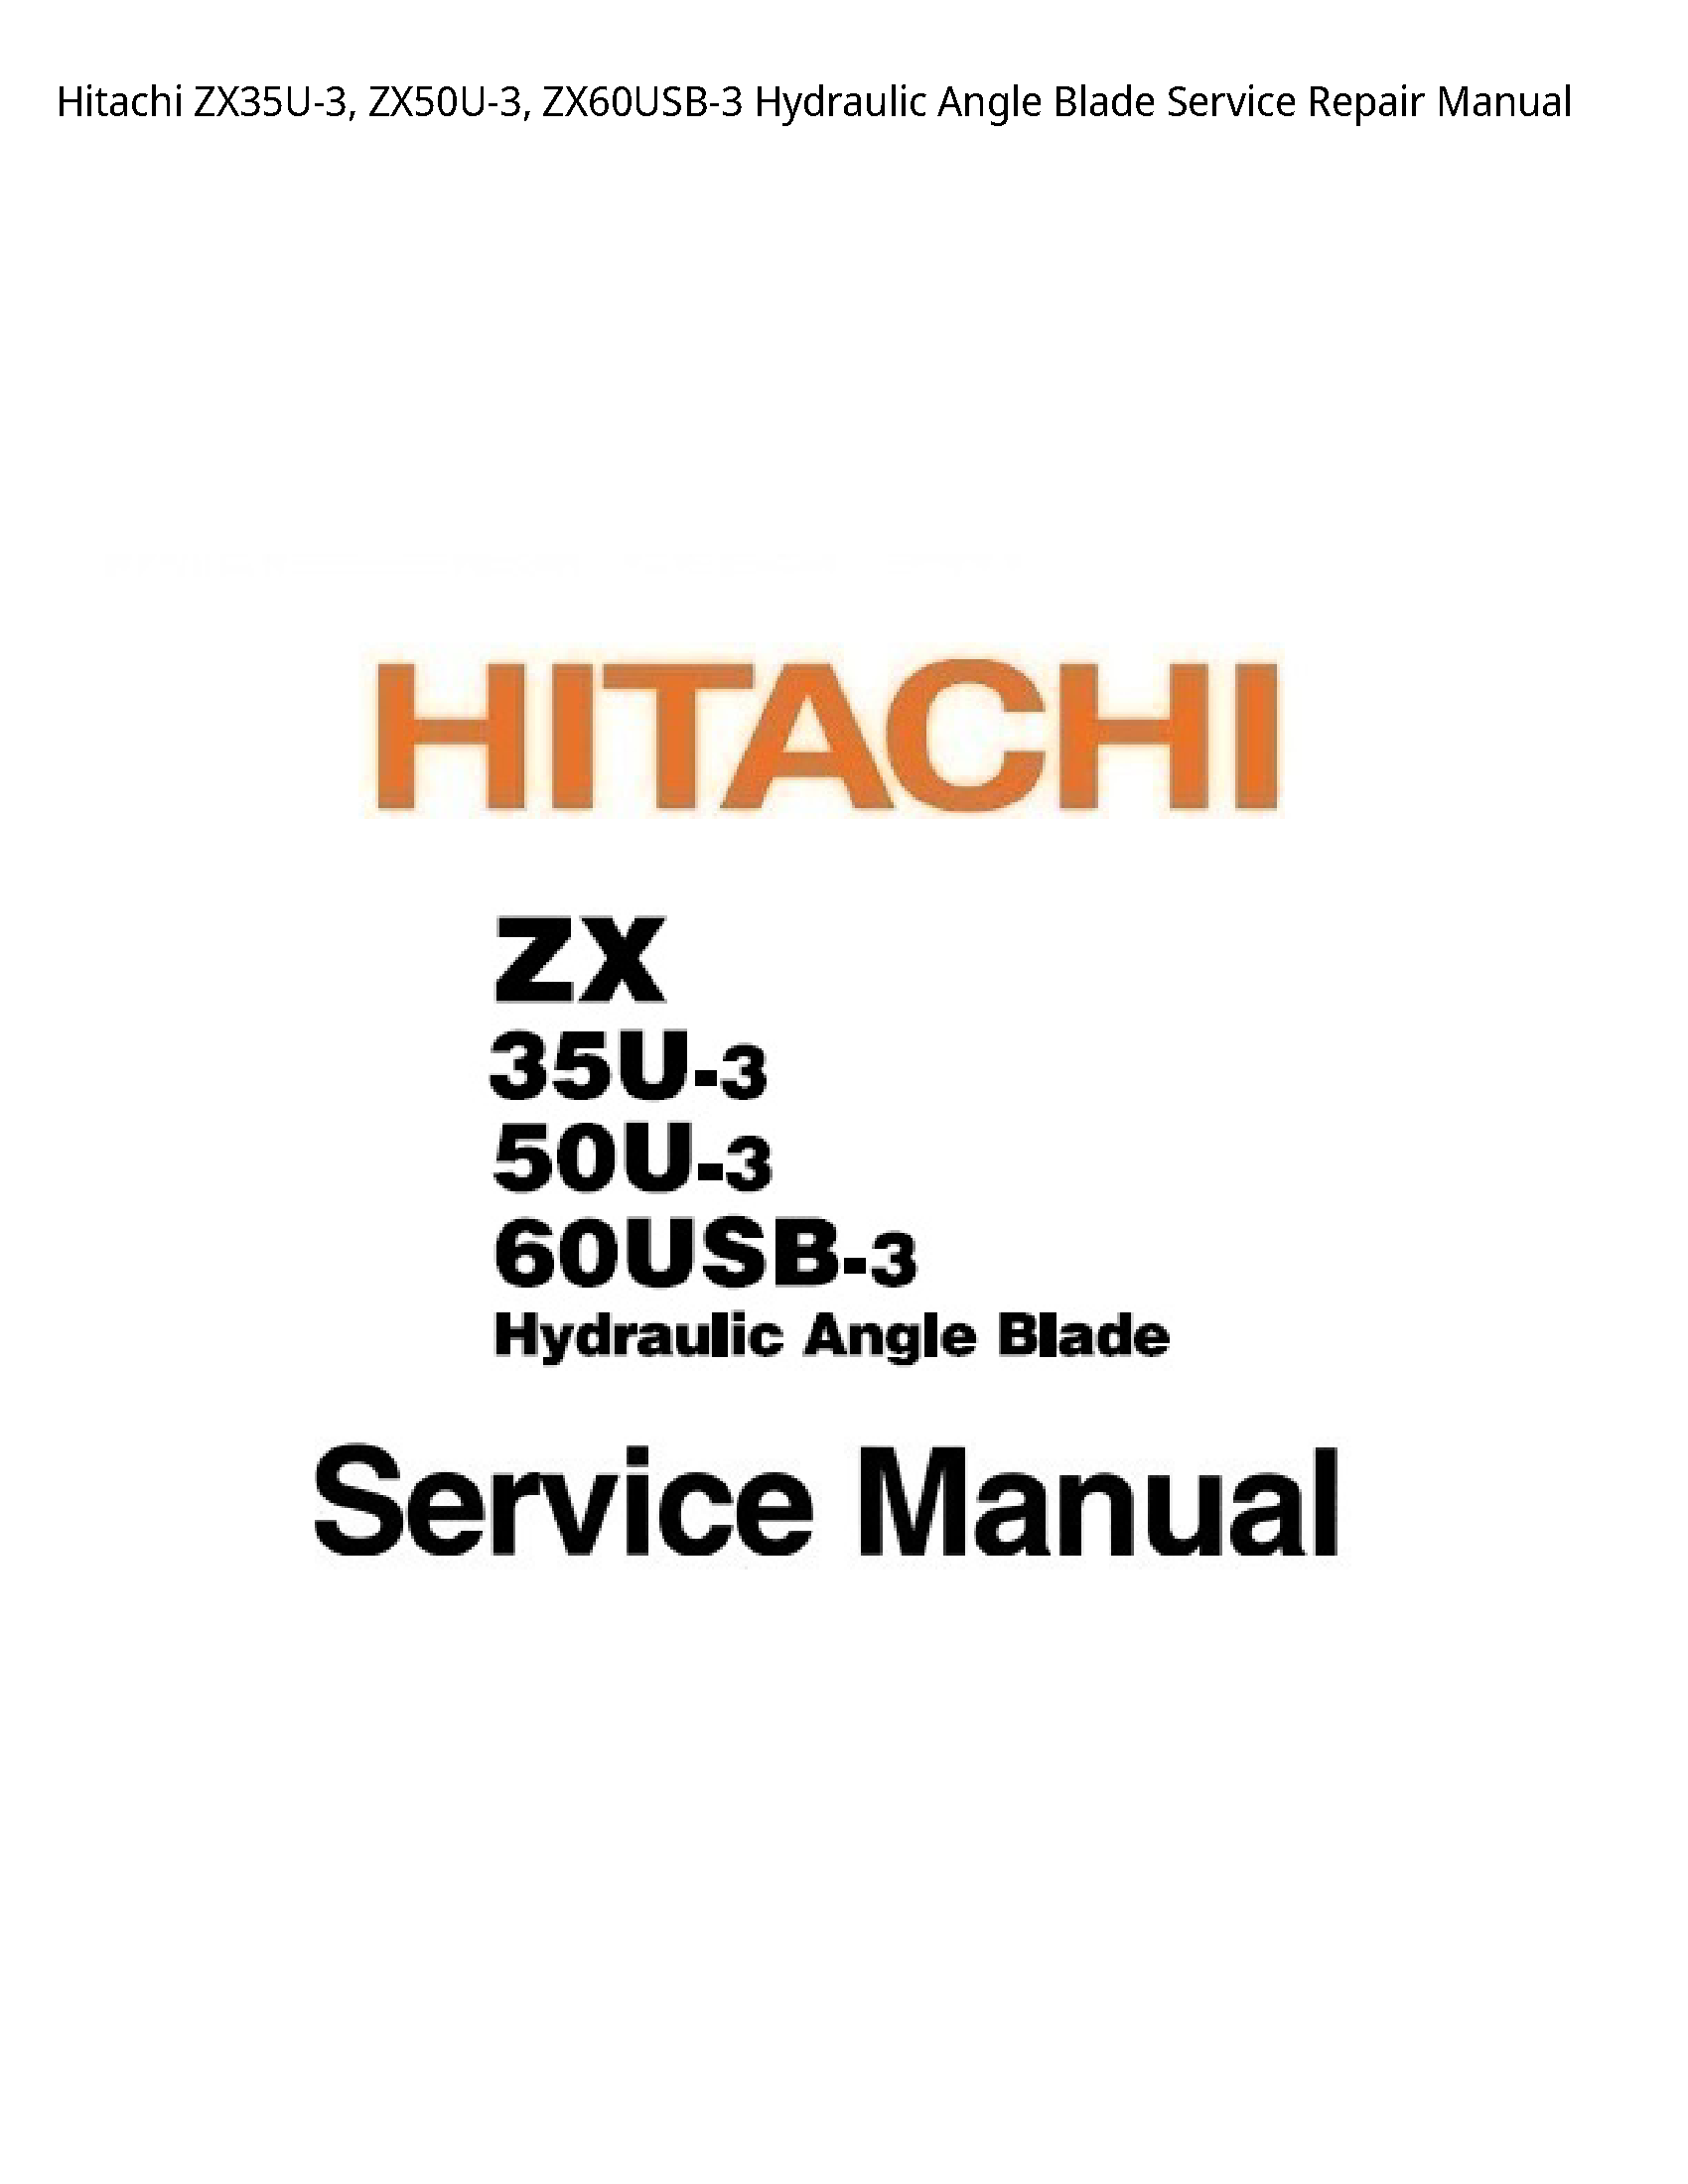 Hitachi ZX35U-3 Hydraulic Angle Blade manual